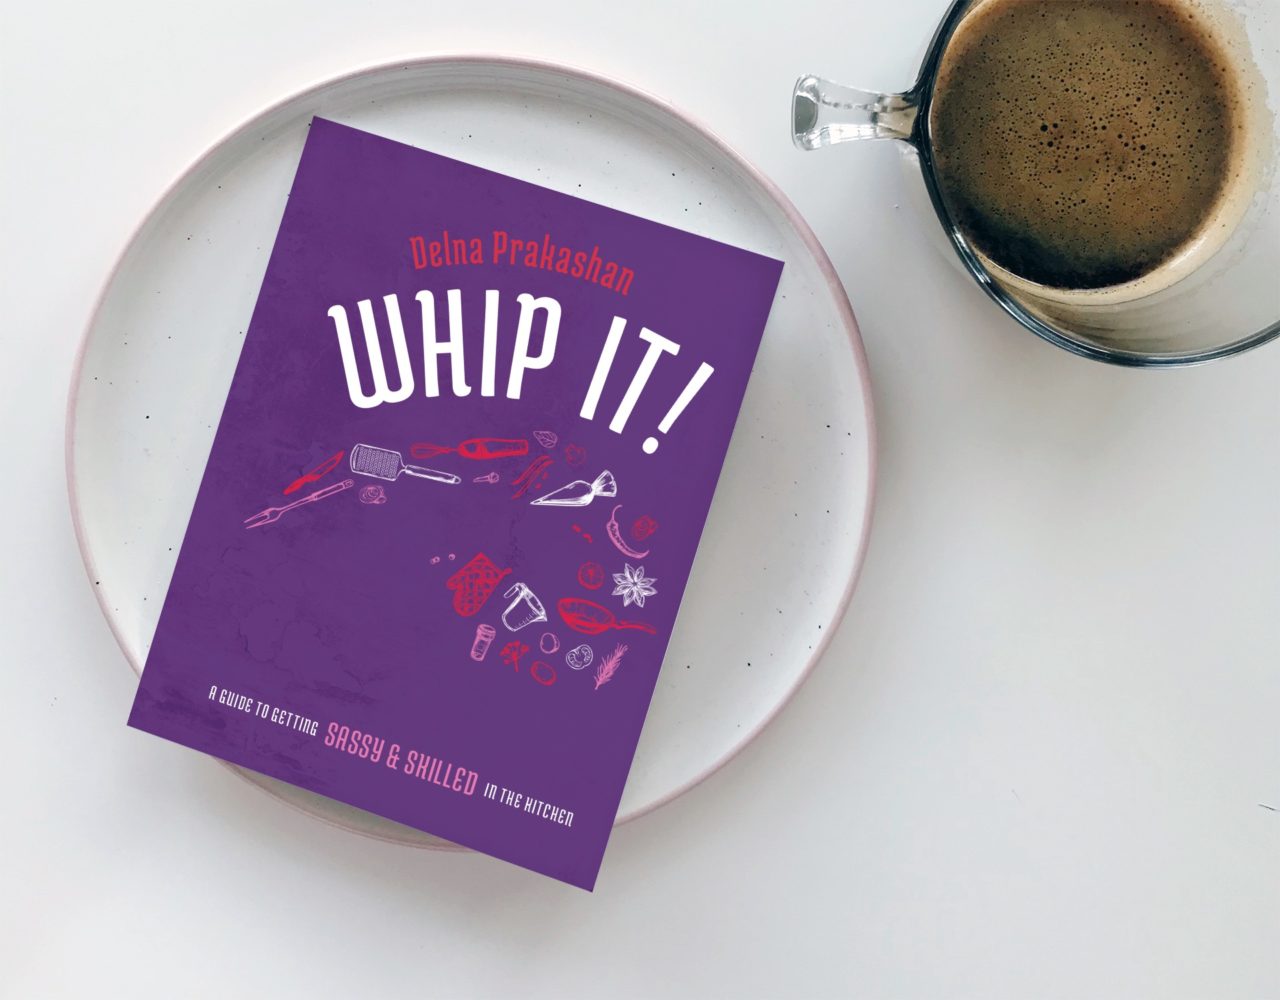 Whip It! cookbook